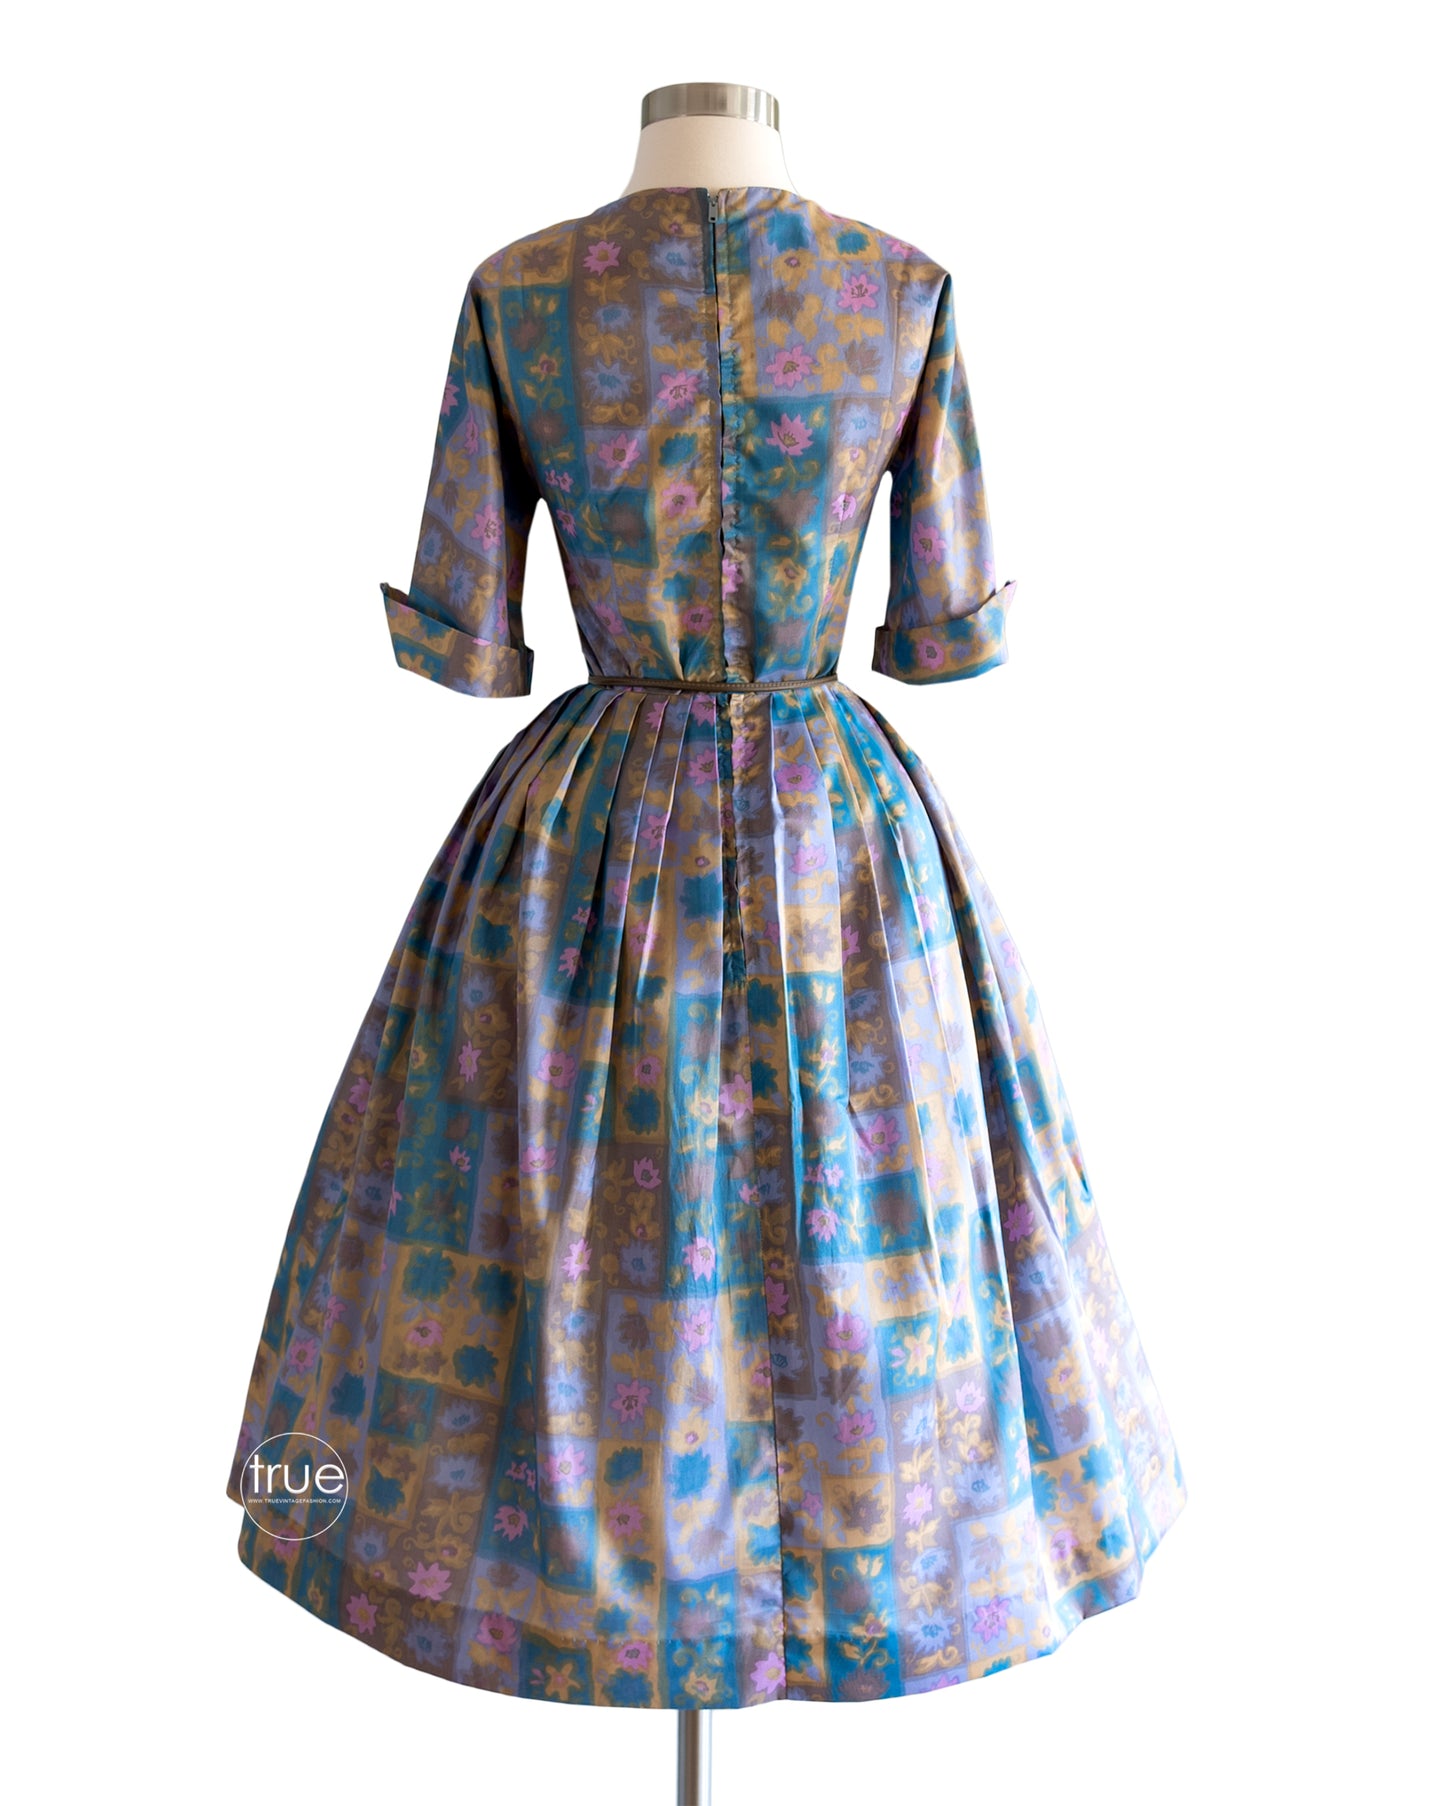 vintage 1950's dress ...pretty MEG MARLOWE summer to autumn floral dress